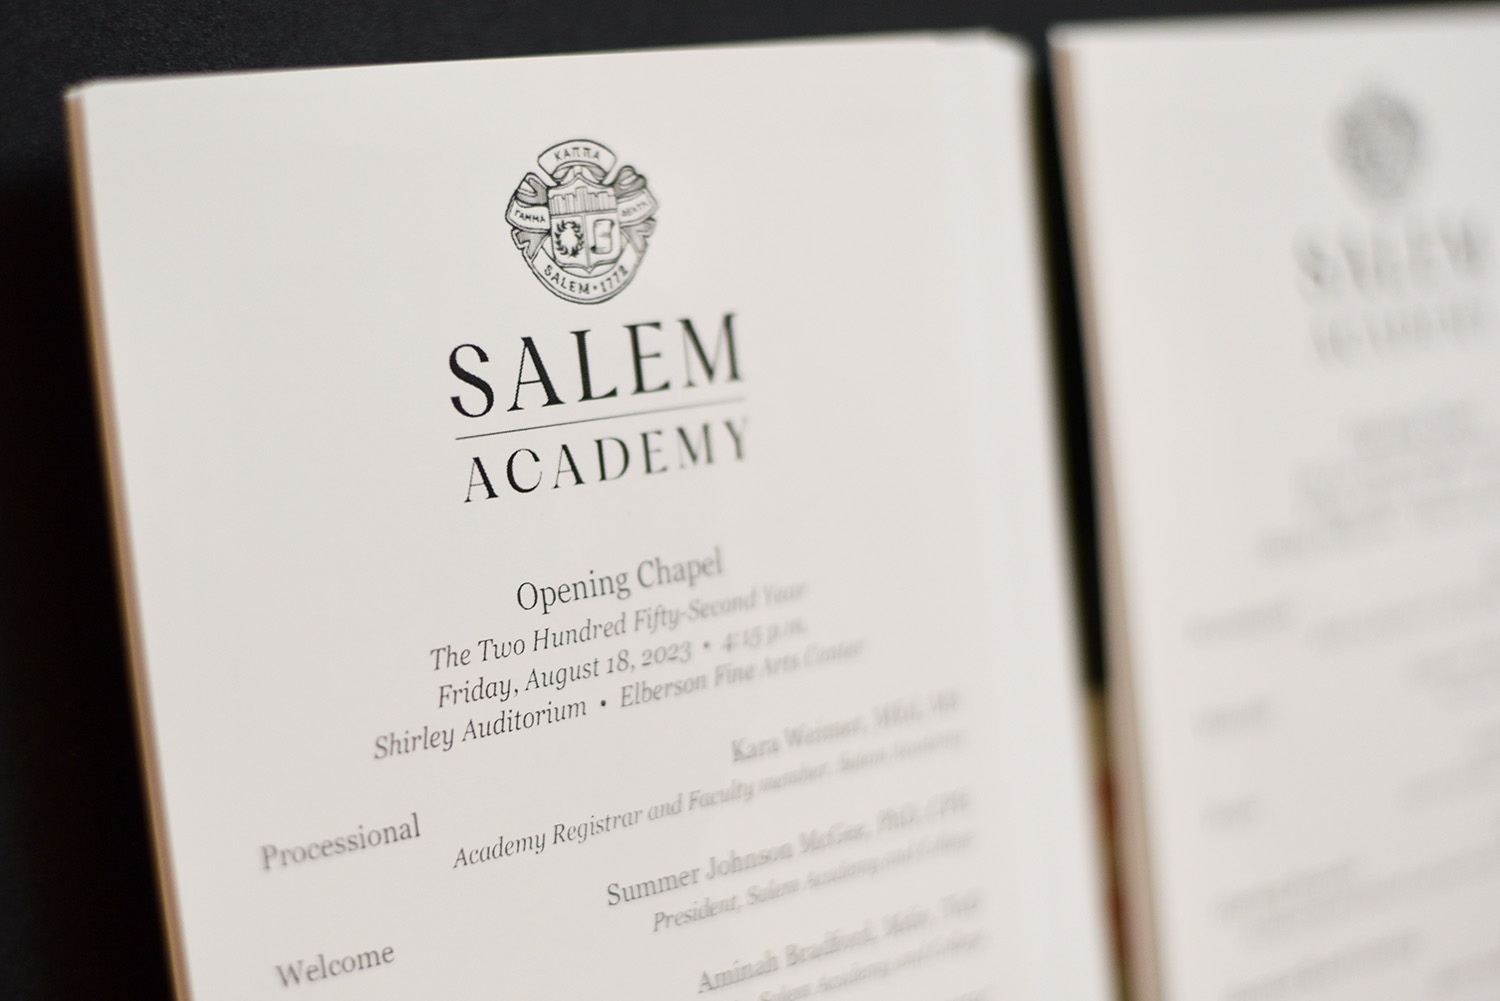 Salem academy opening chapel book